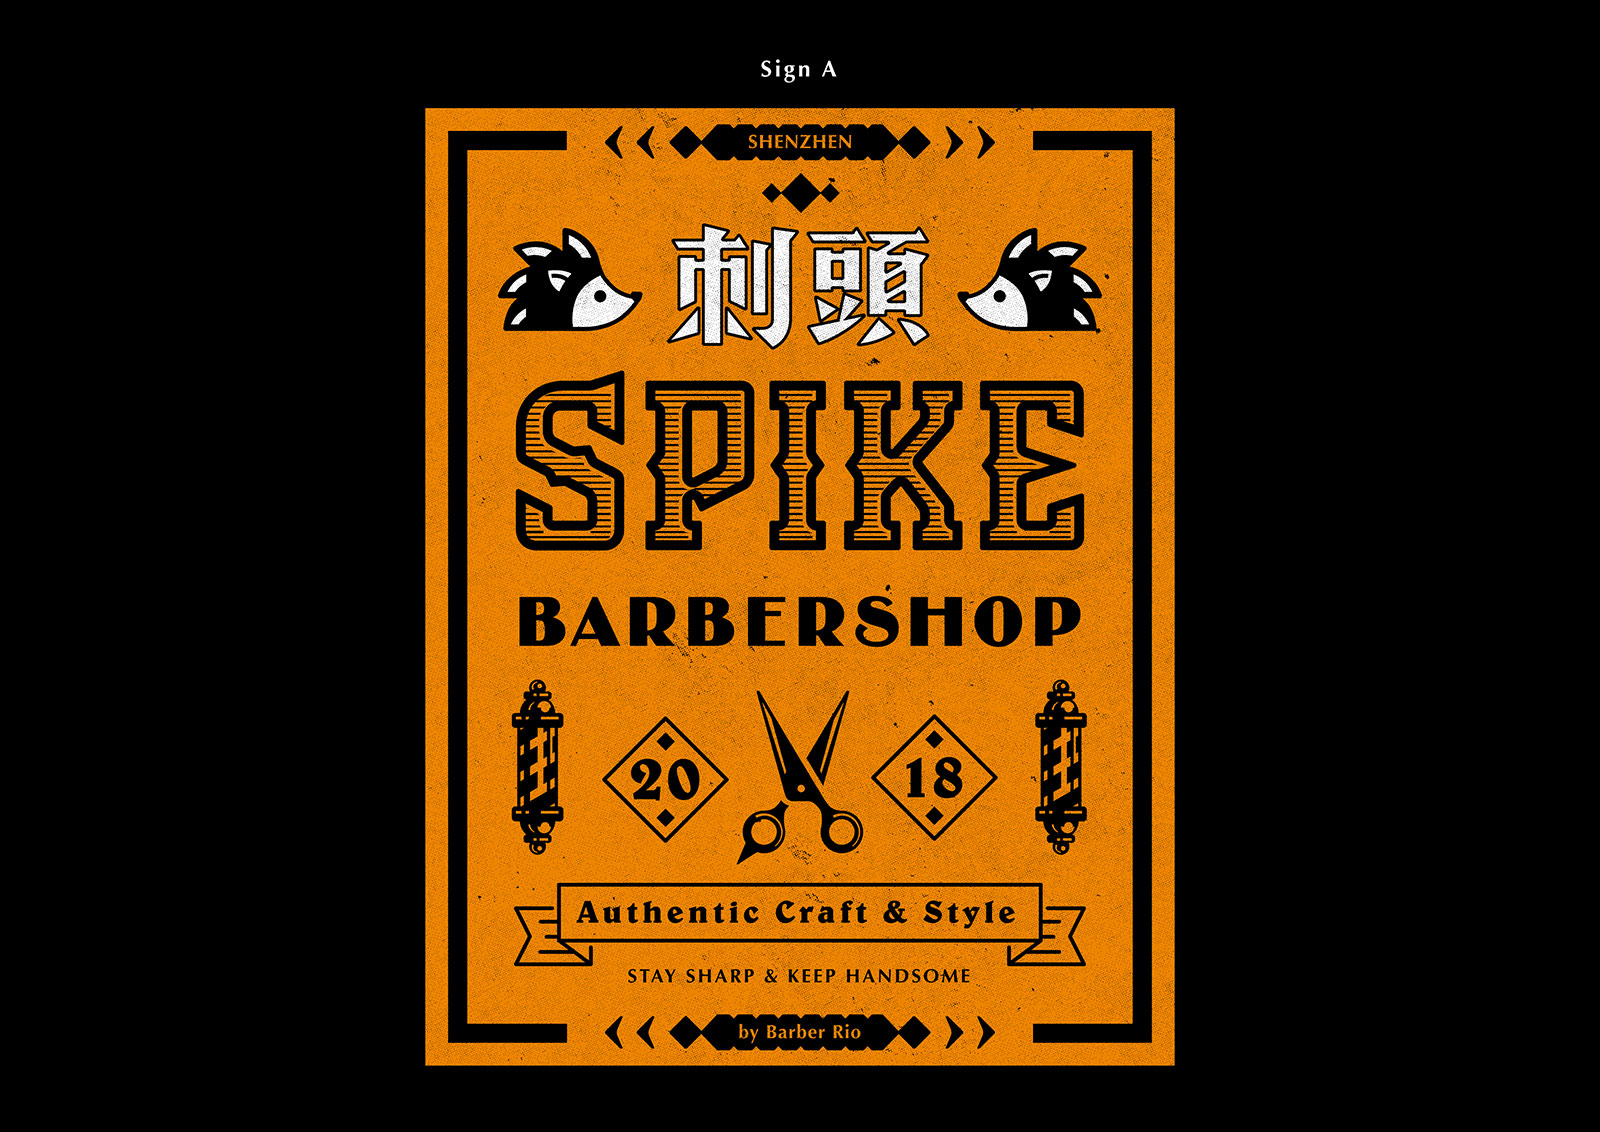 刺头SPIKE Barbershop